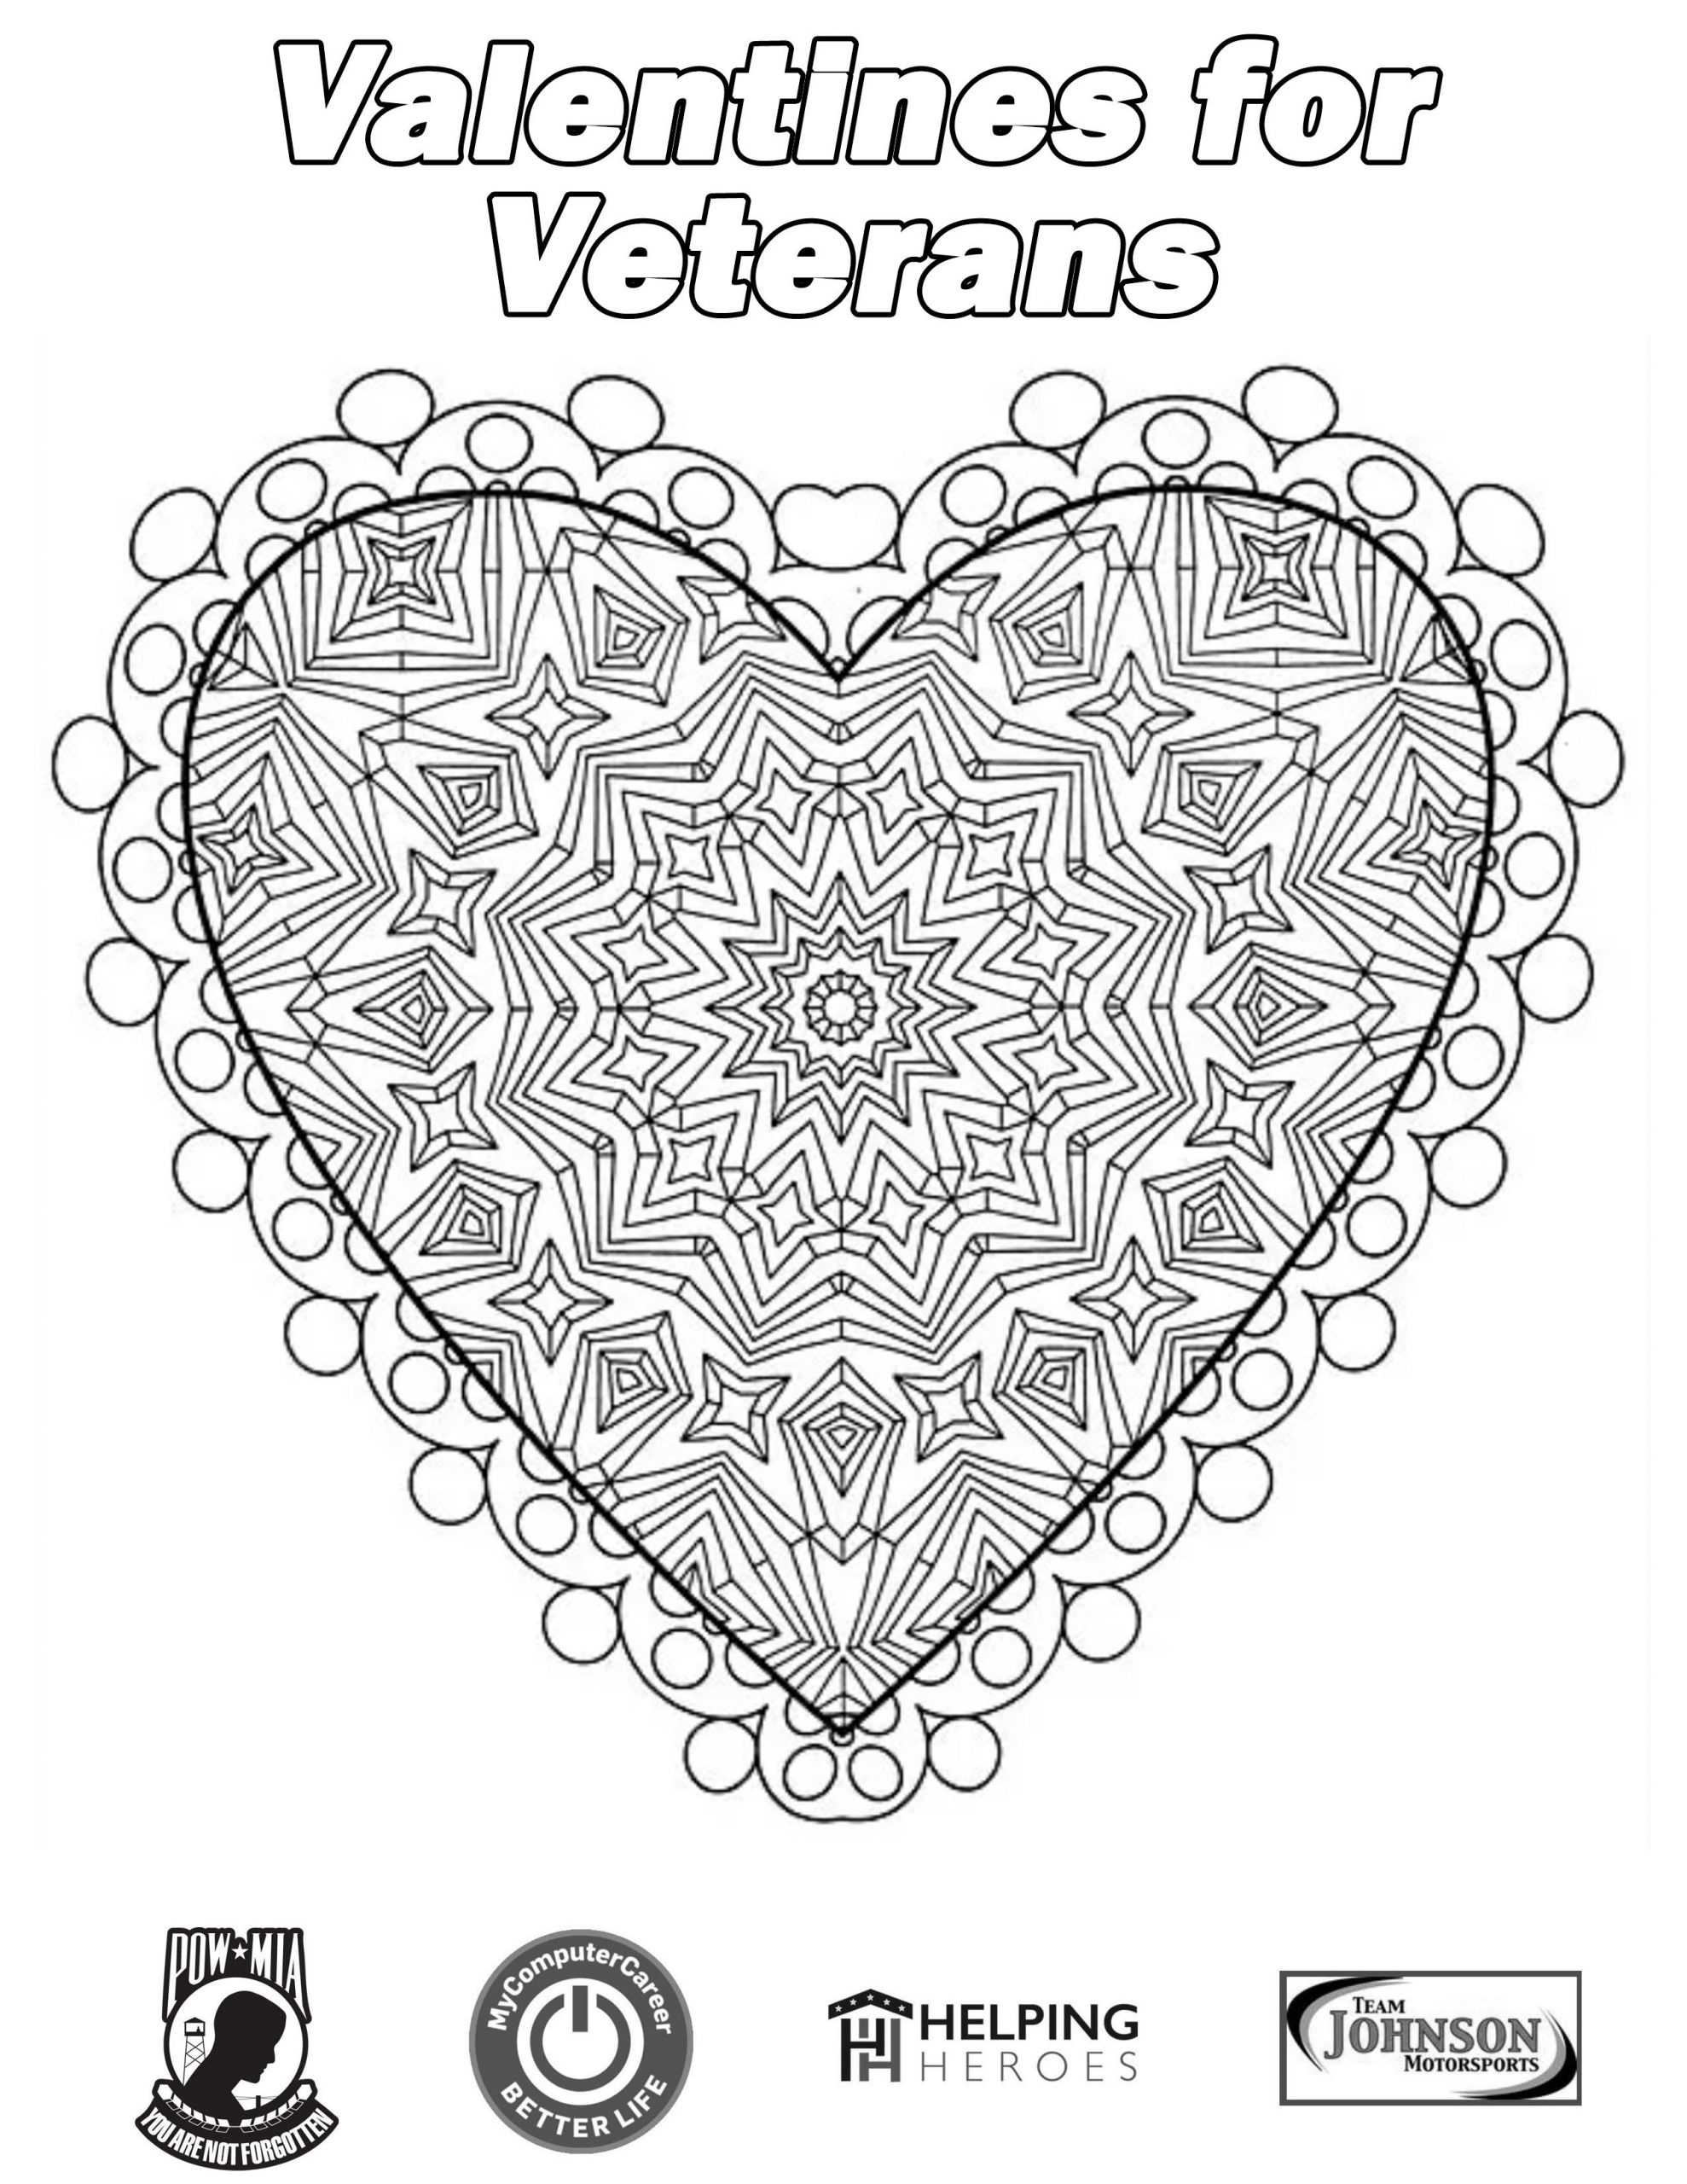 Valentines for veterans